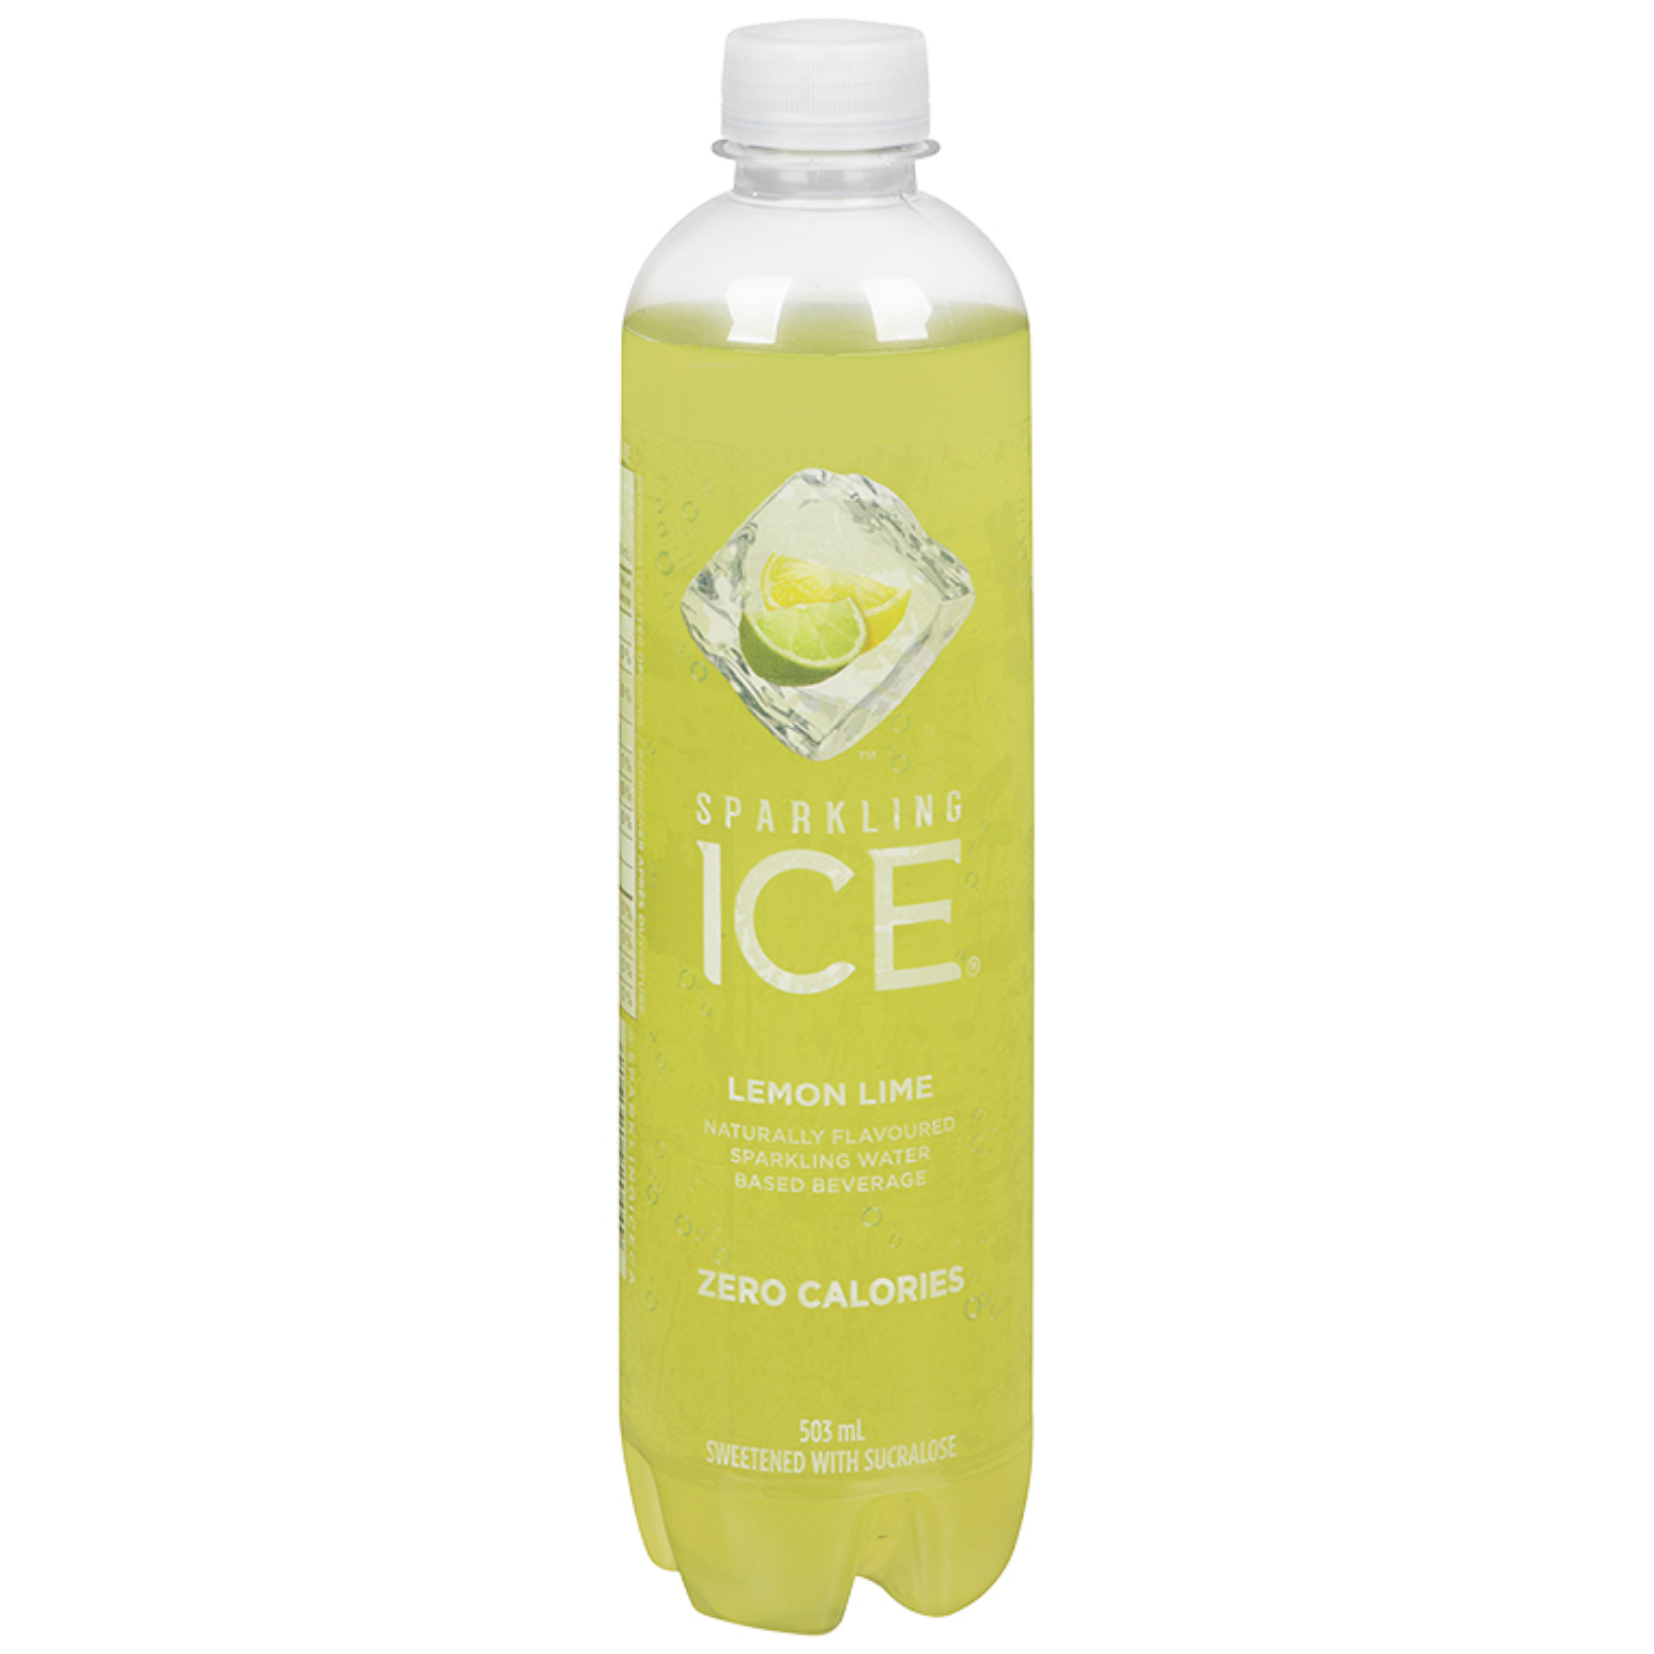 Sparkling Ice Lemon Lime Sparkling Water 503ml